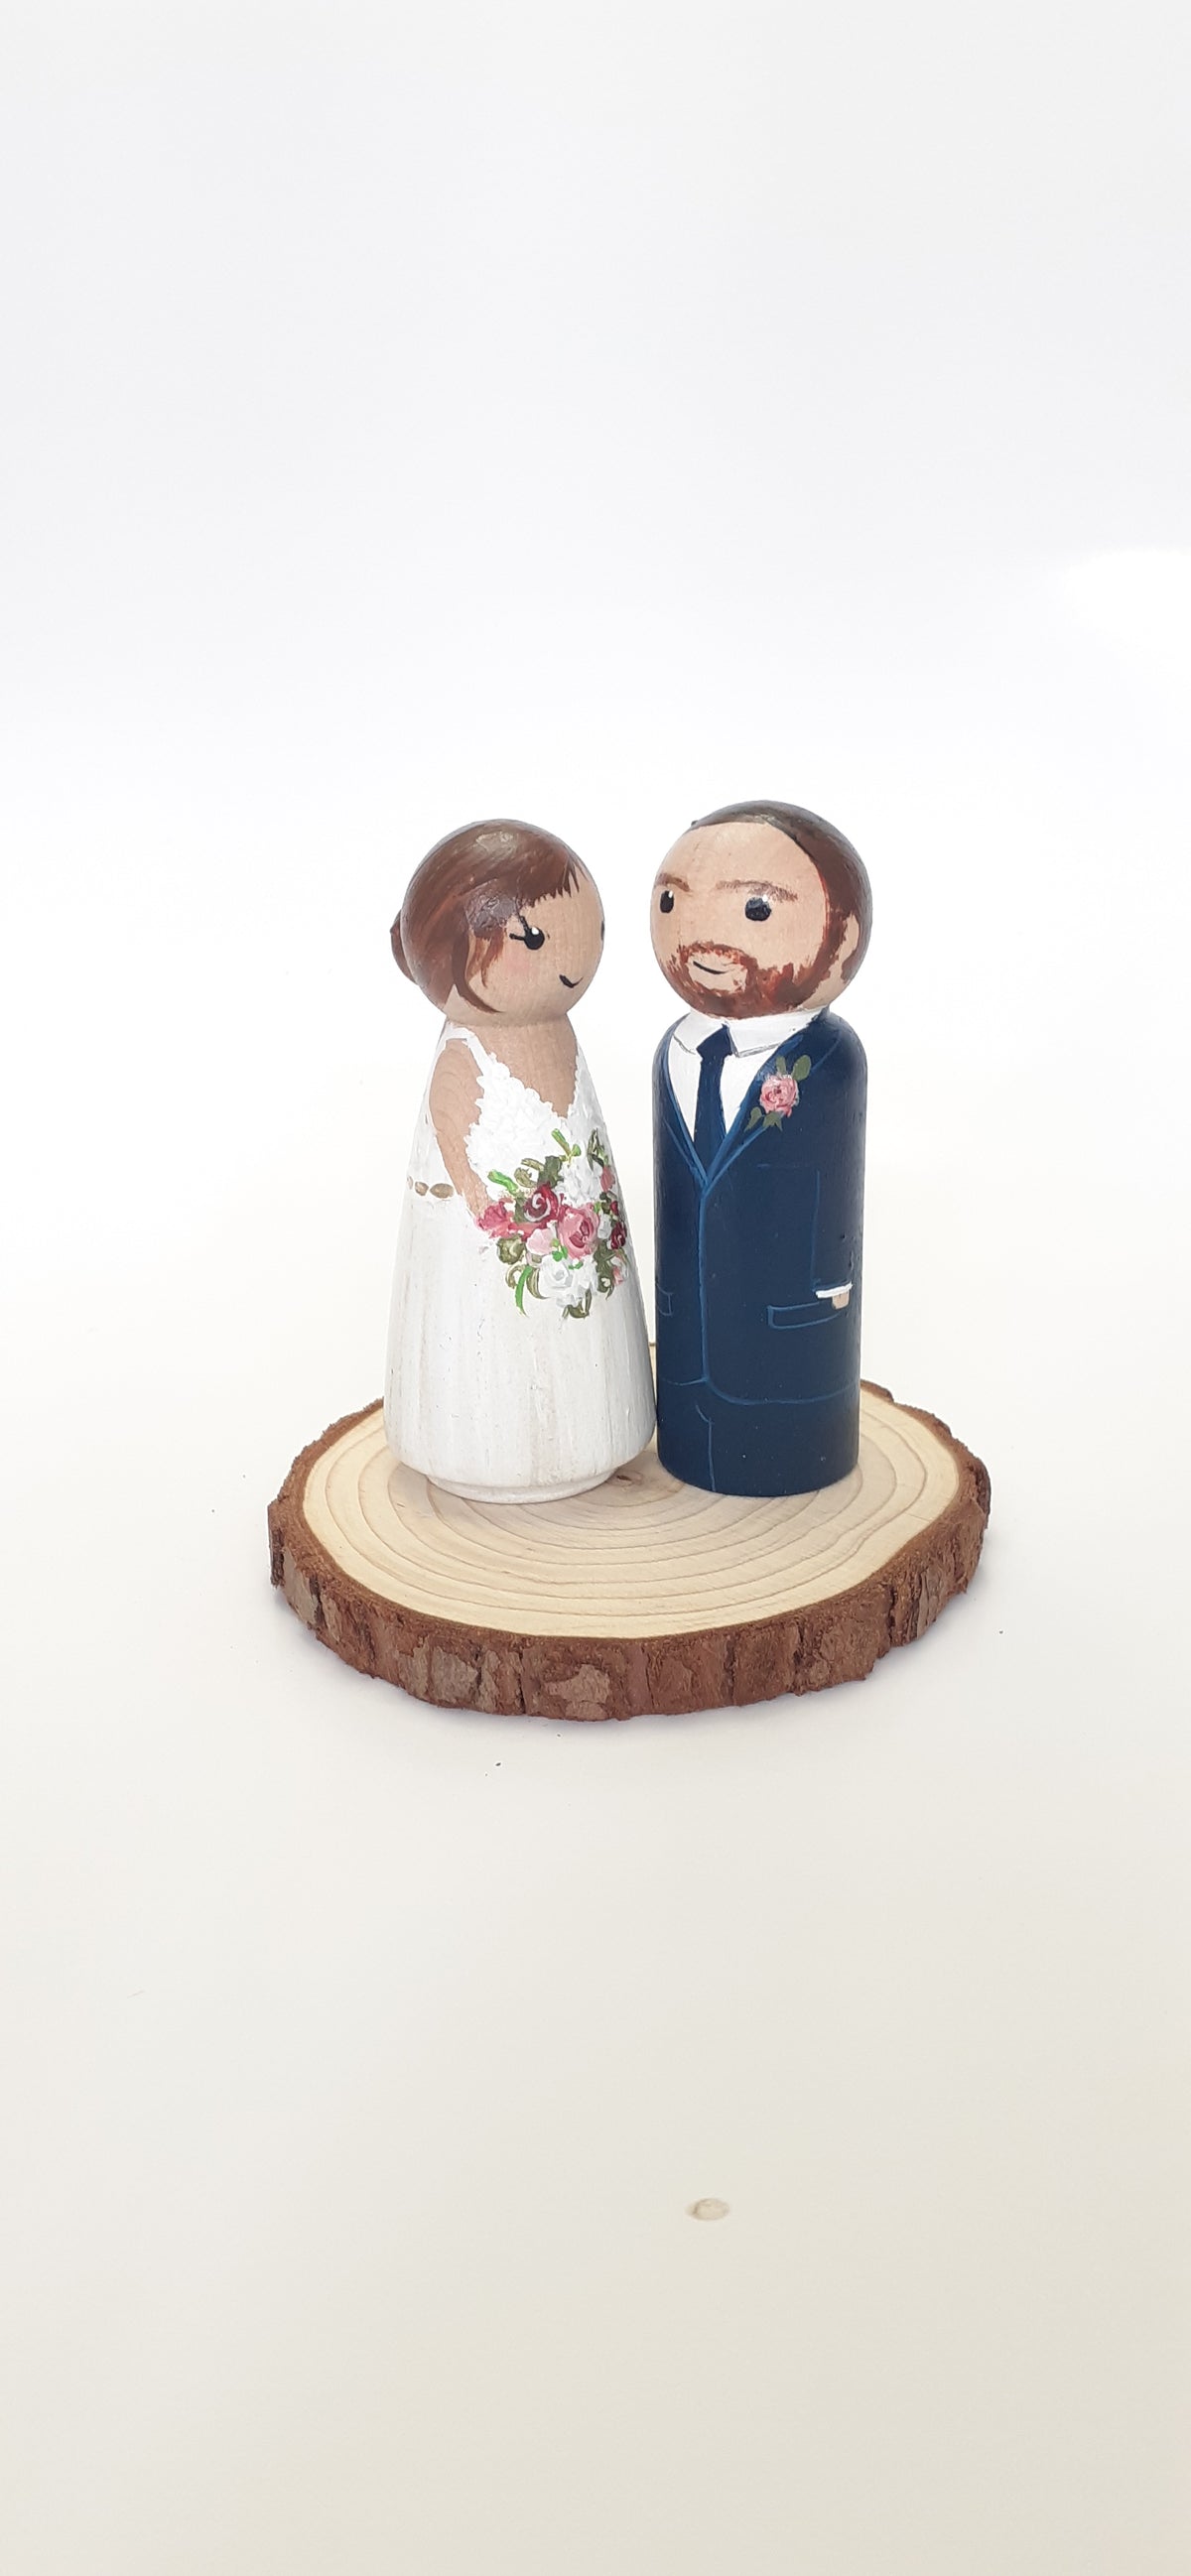 Customized Wedding Cake Topper, personalized peg dolls